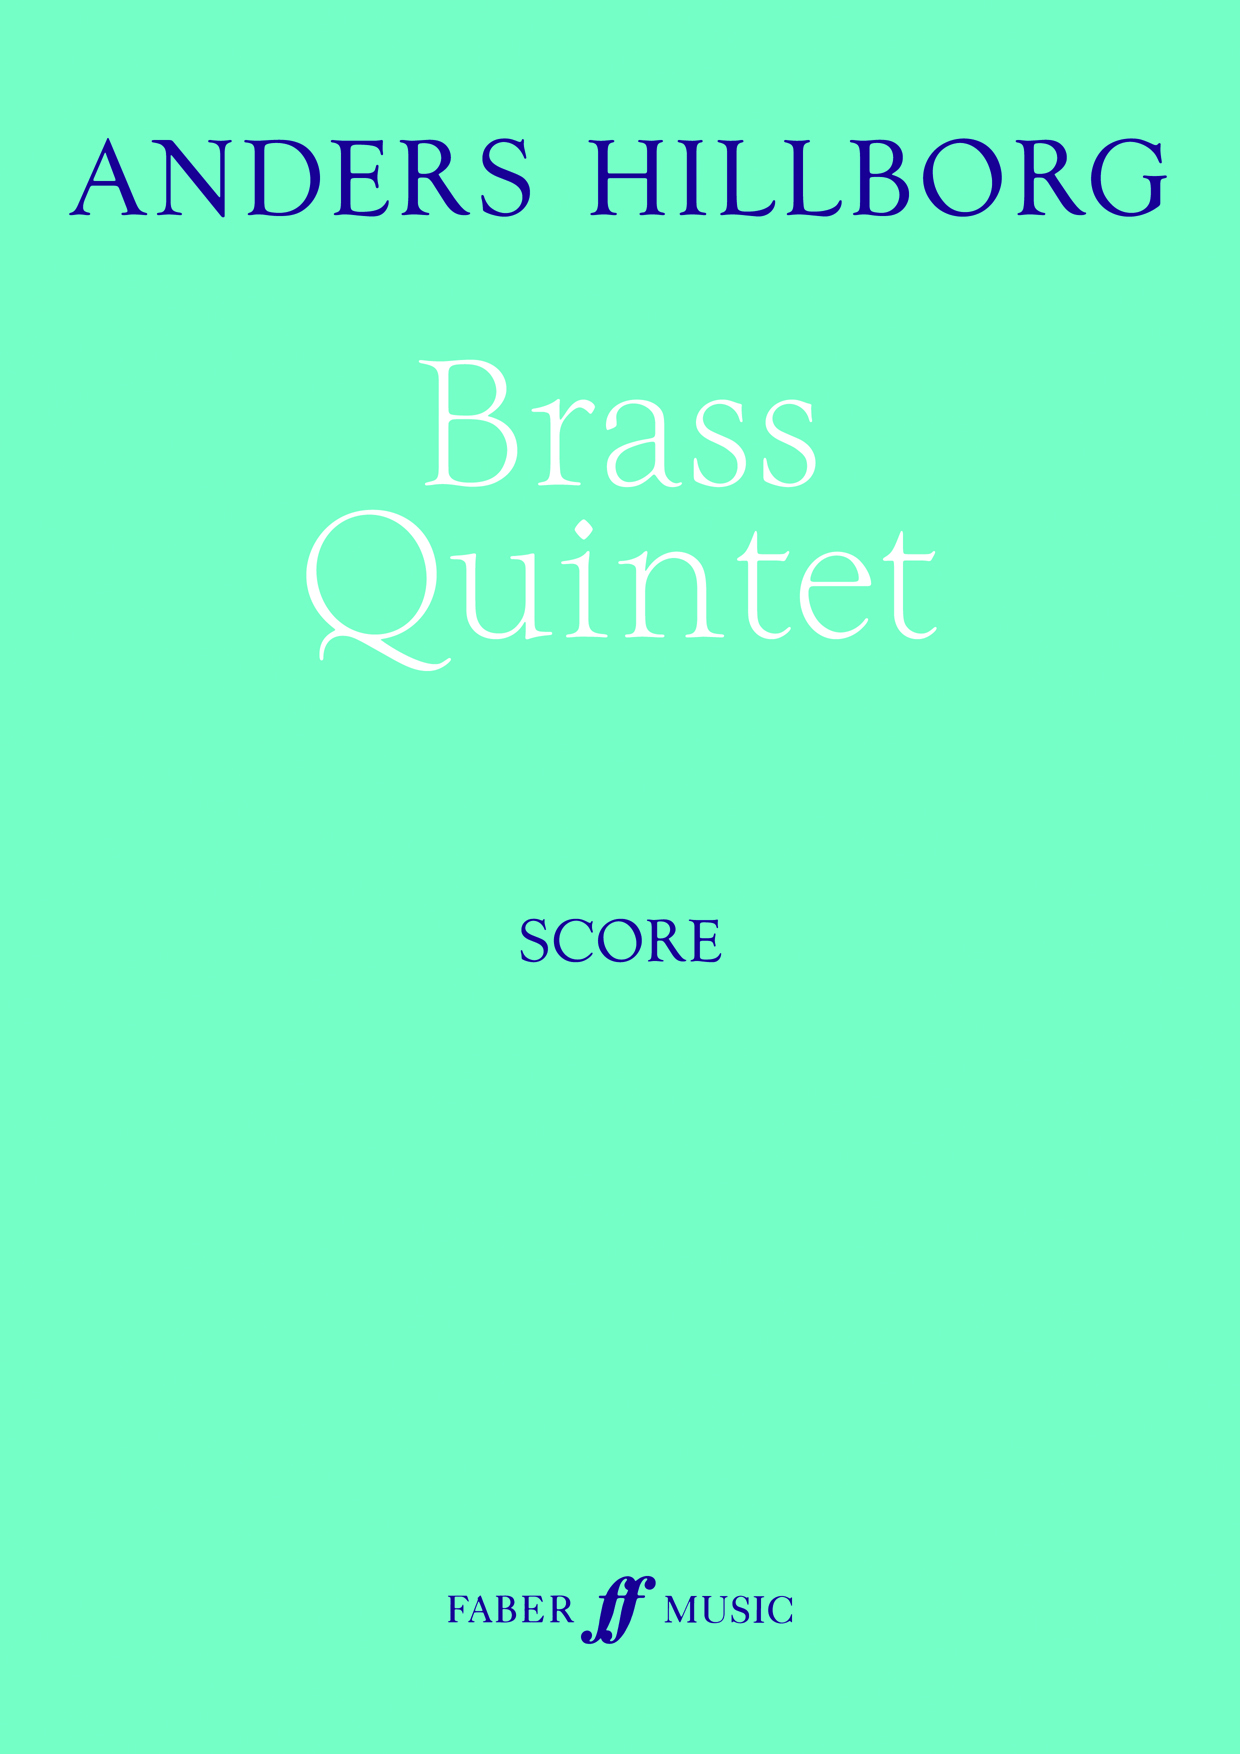 Brass Quintet (HILLBORG ANDERS)